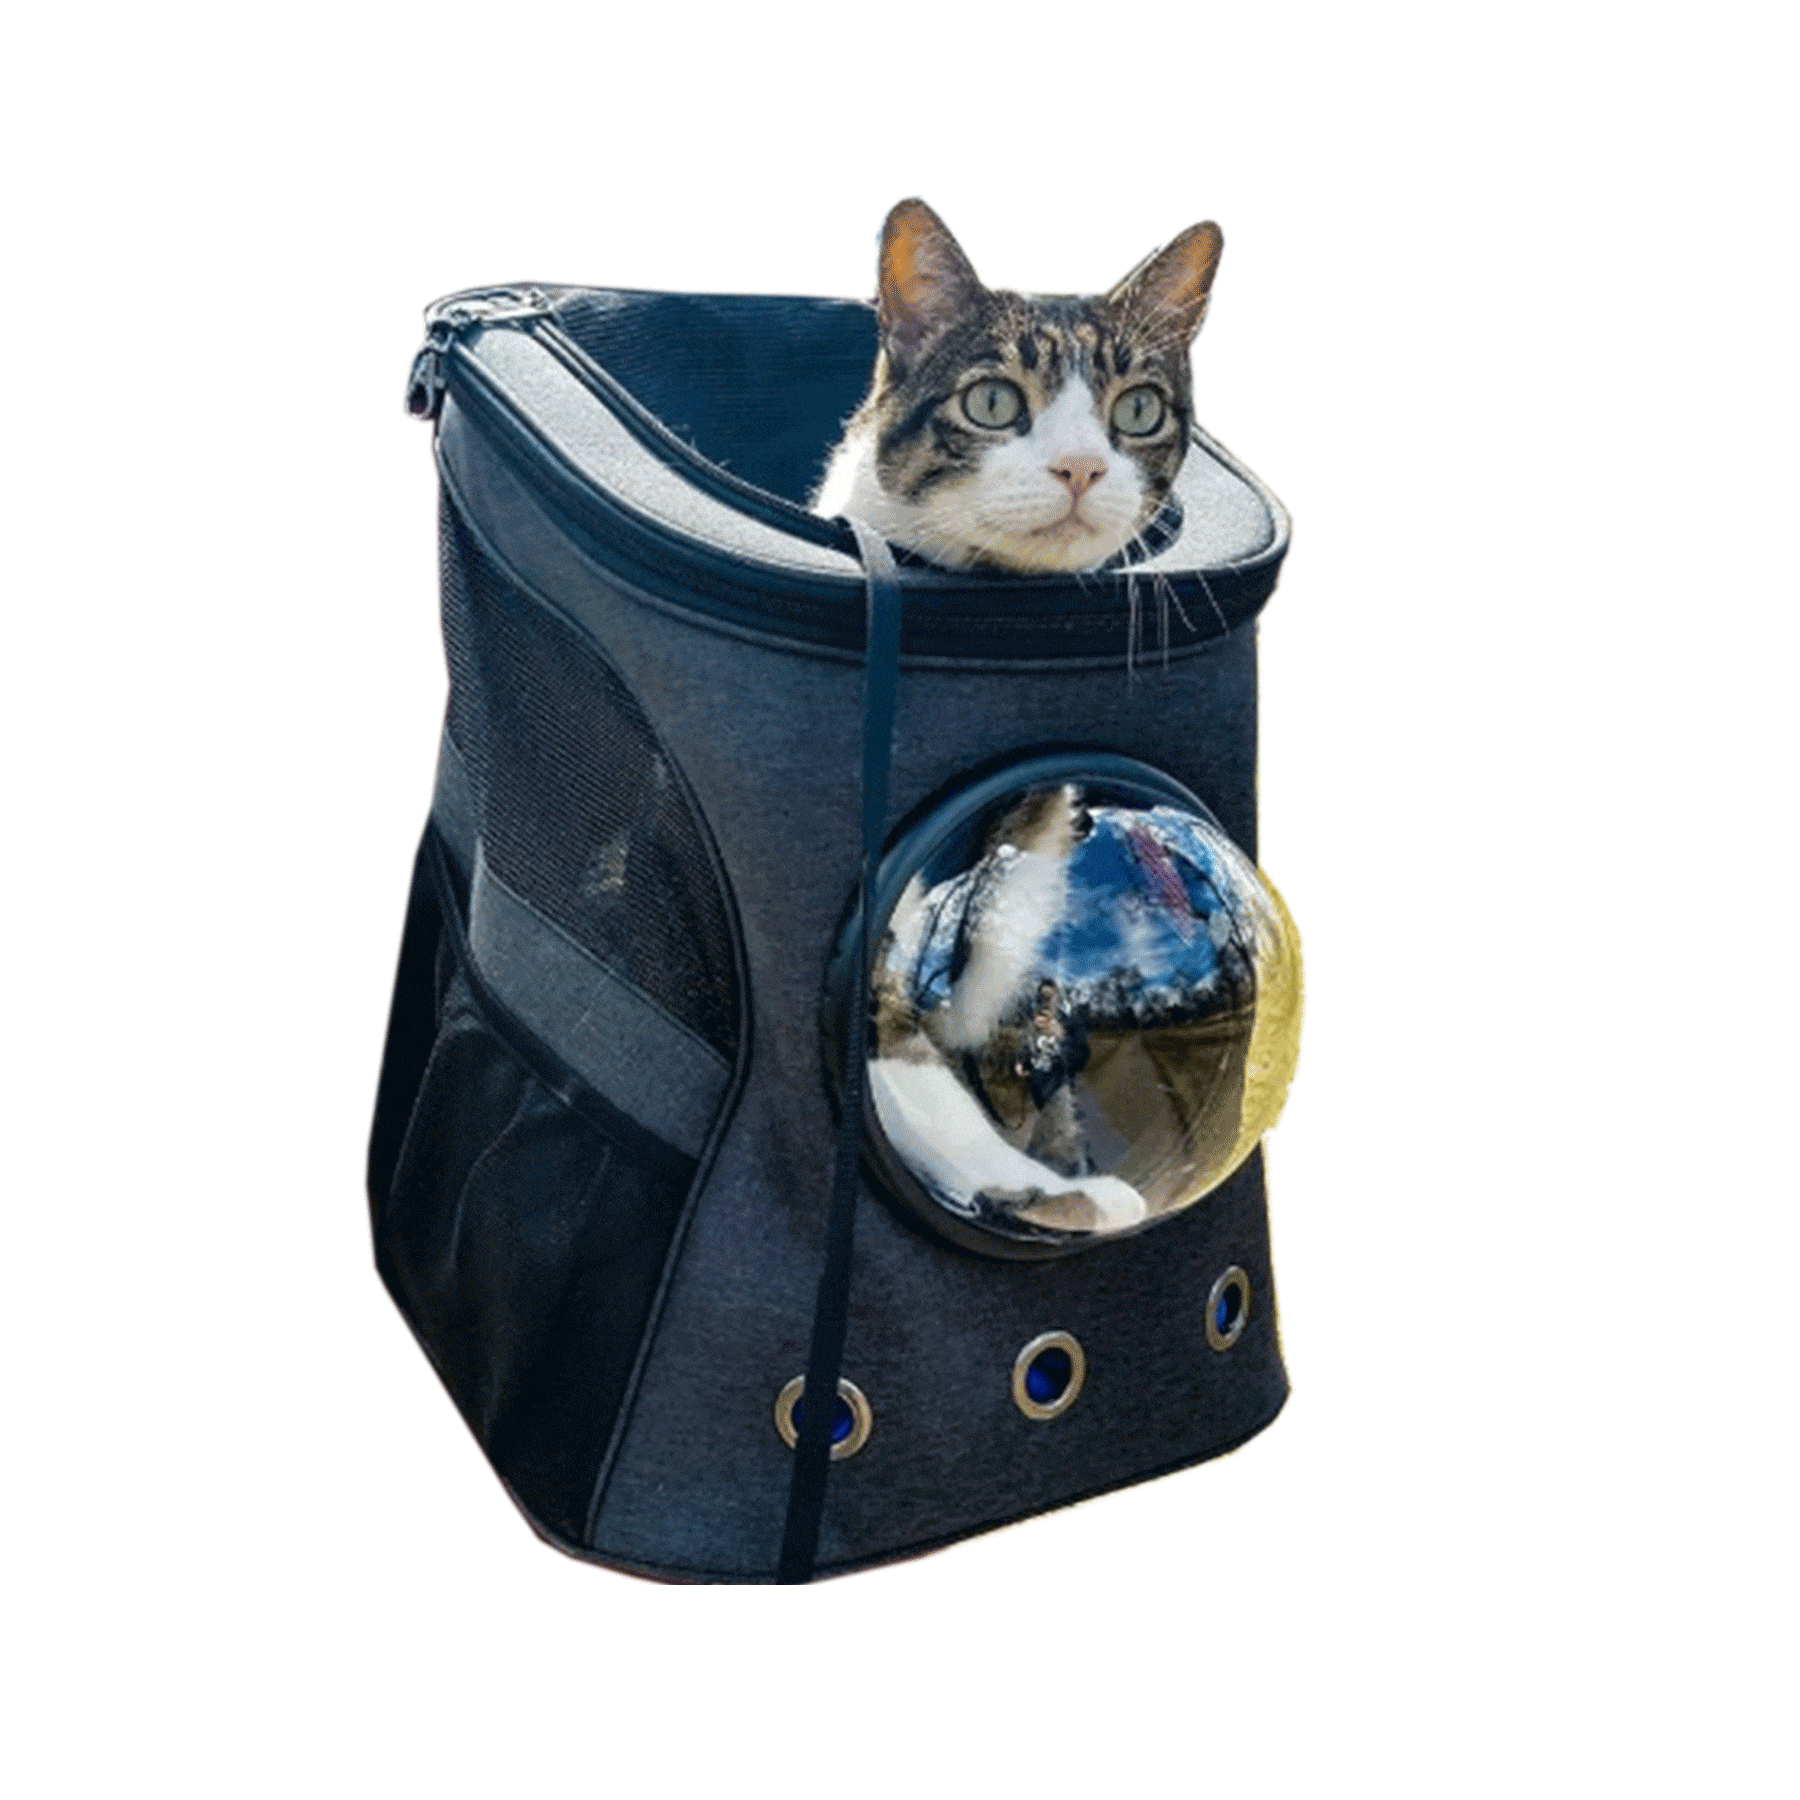 "The Complete Adventure Cat" Bundle: Fat Cat Backpack, Harness, Leash, Retractable Leash, Travel Buddy